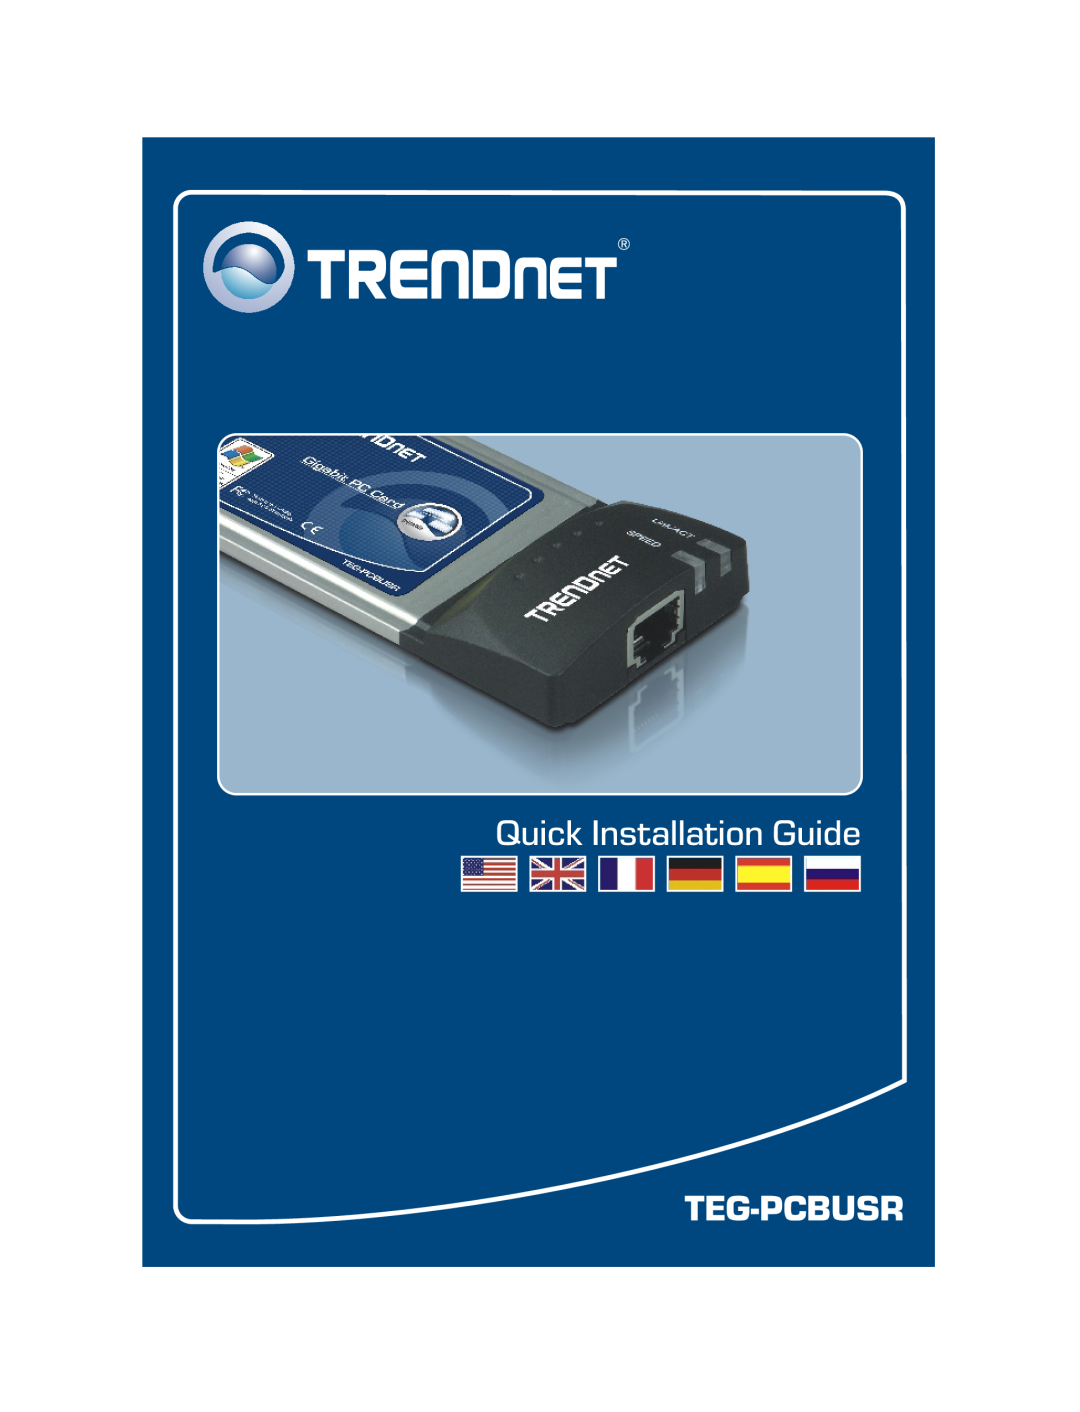 TRENDnet TEG-PCBUSR manual Quick Installation Guide, Teg-Pcbusr 